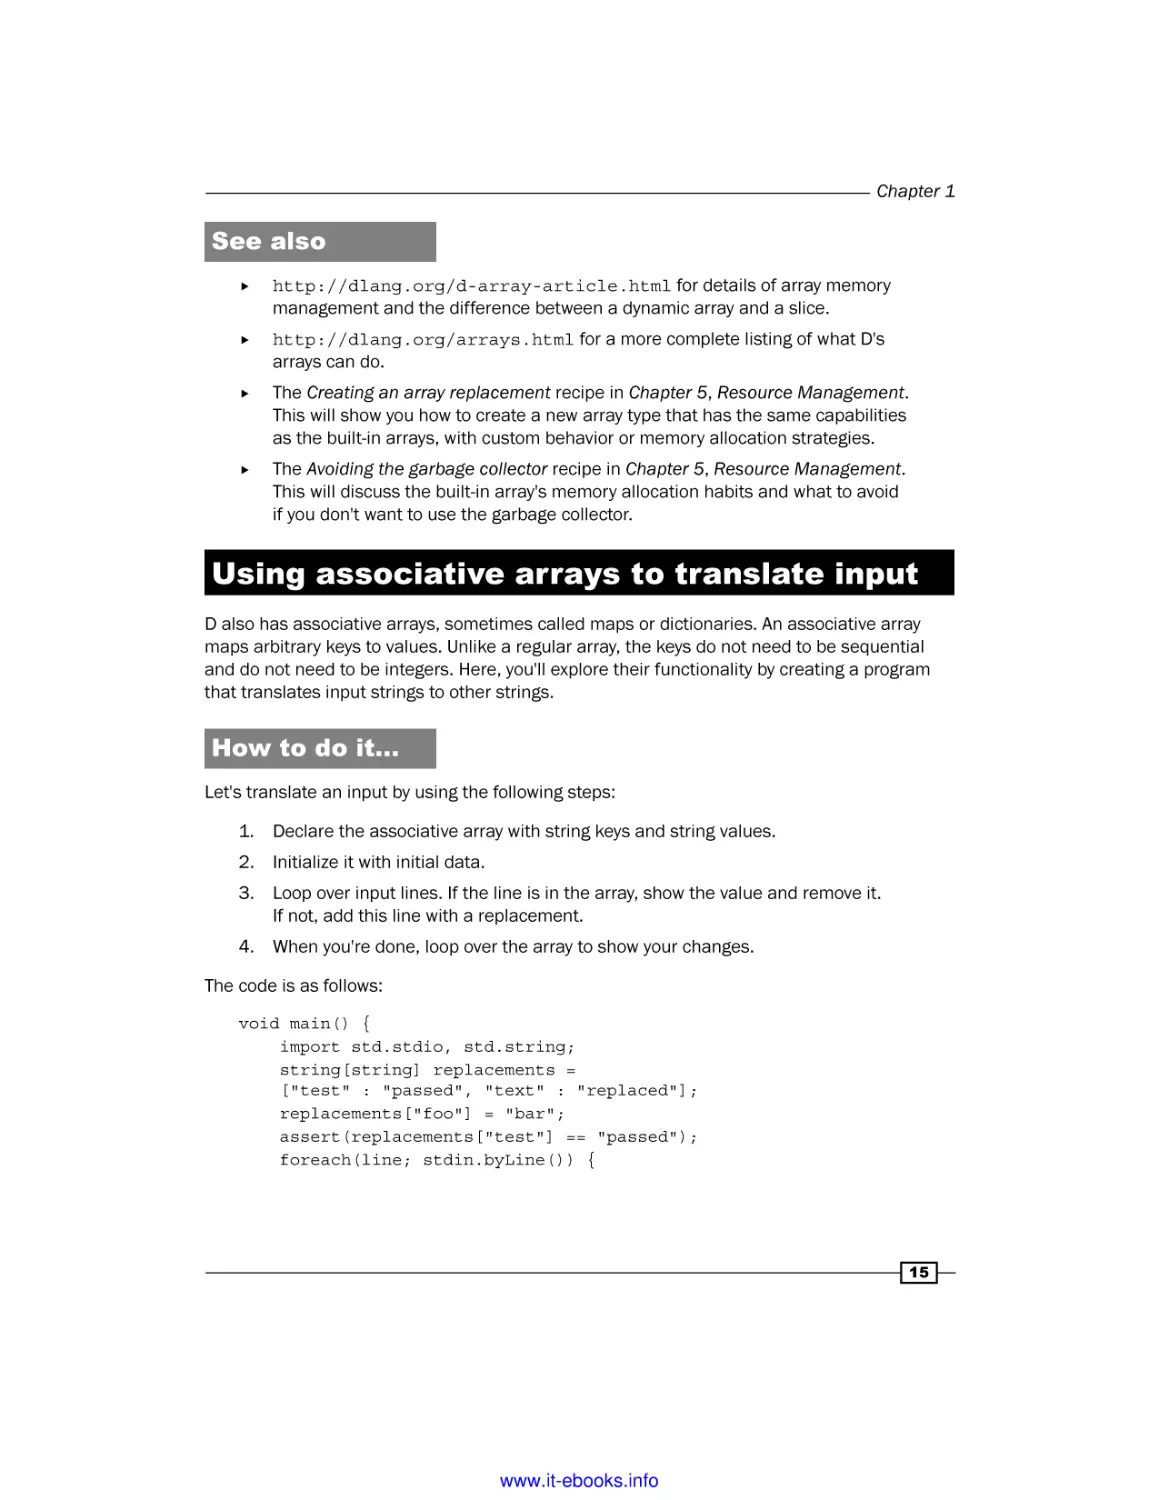 Using associative arrays to translate input